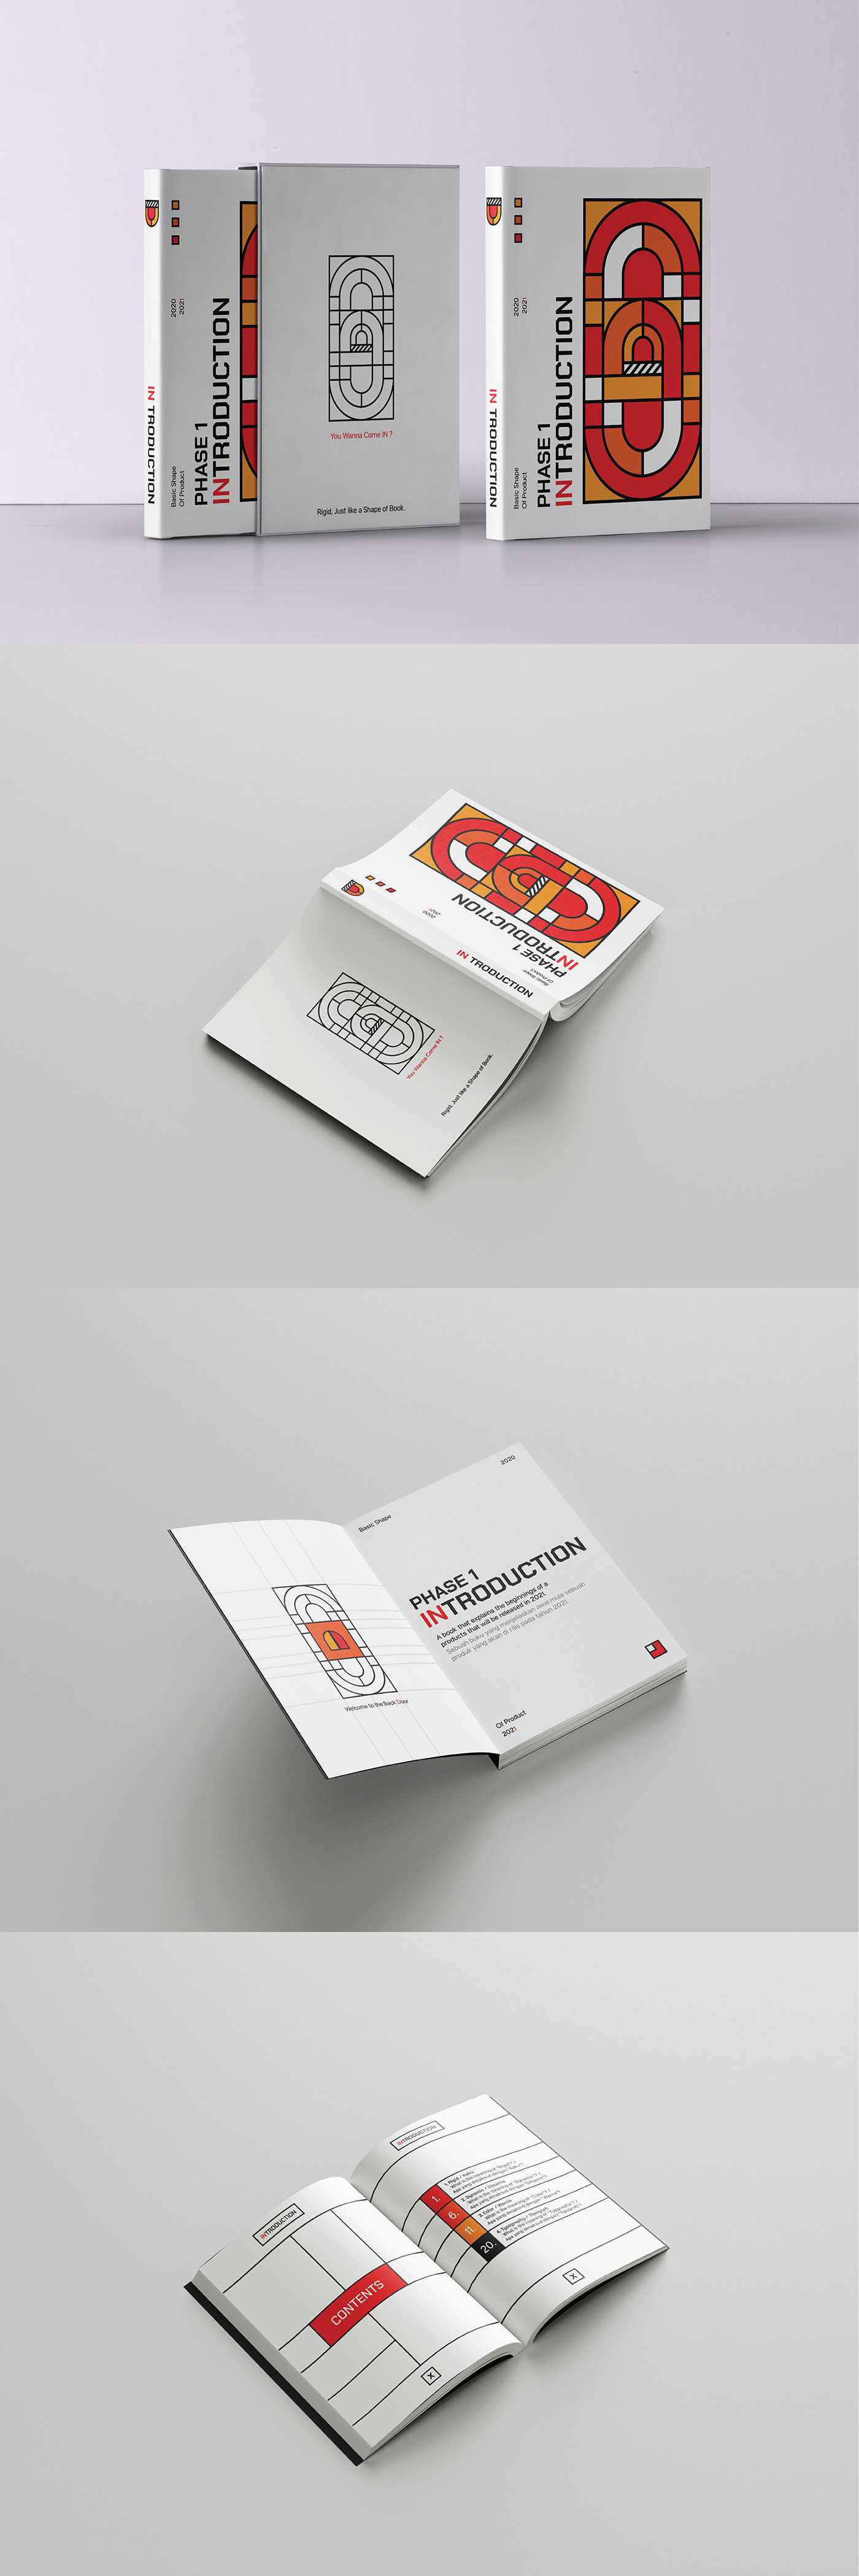 book design Cover Book de stijl swiss design layouting